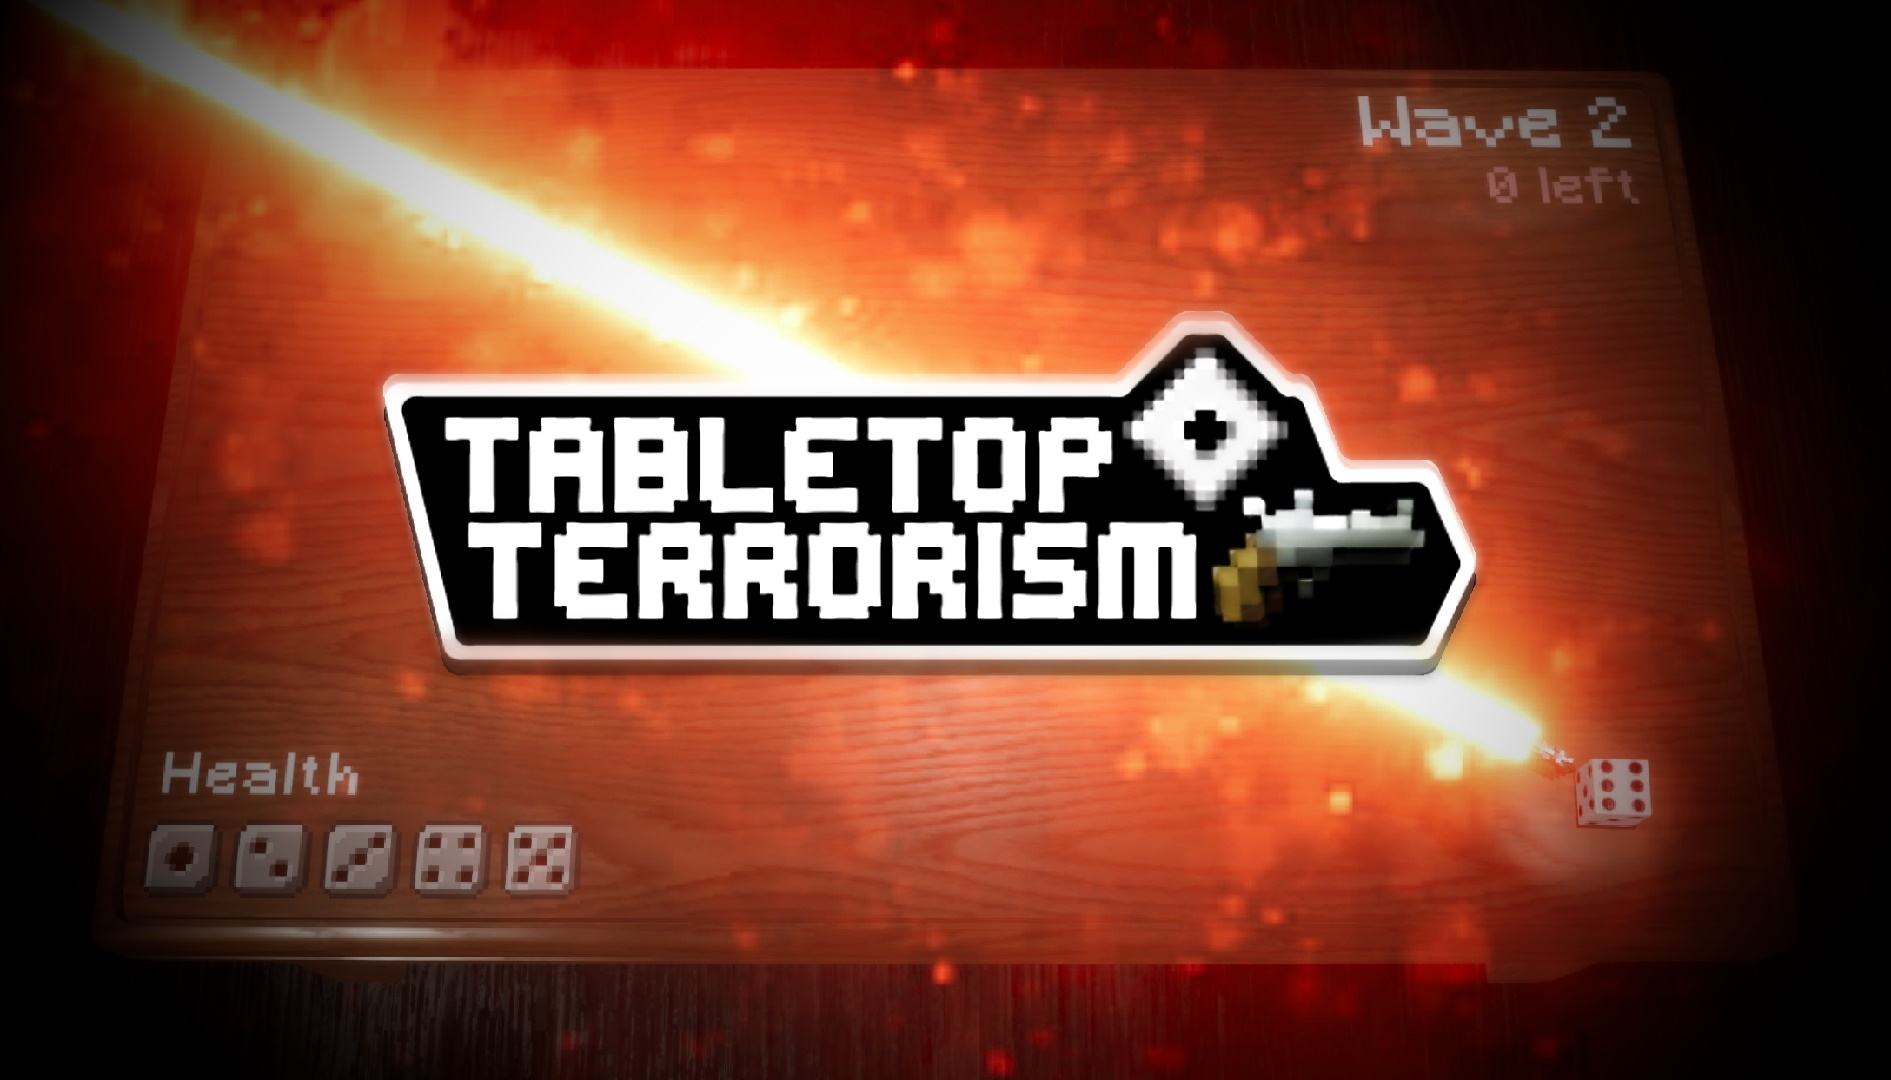 Tabletop Terrorism